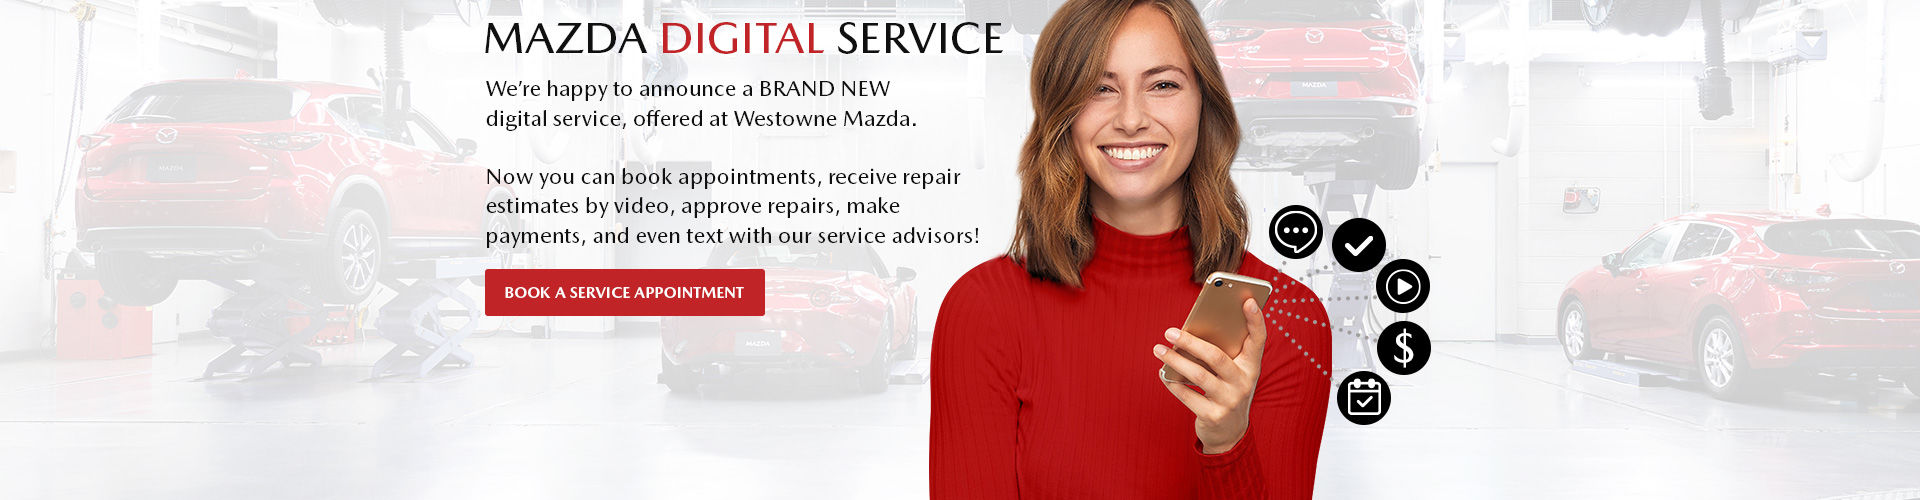 Mazda Digital Service (header)